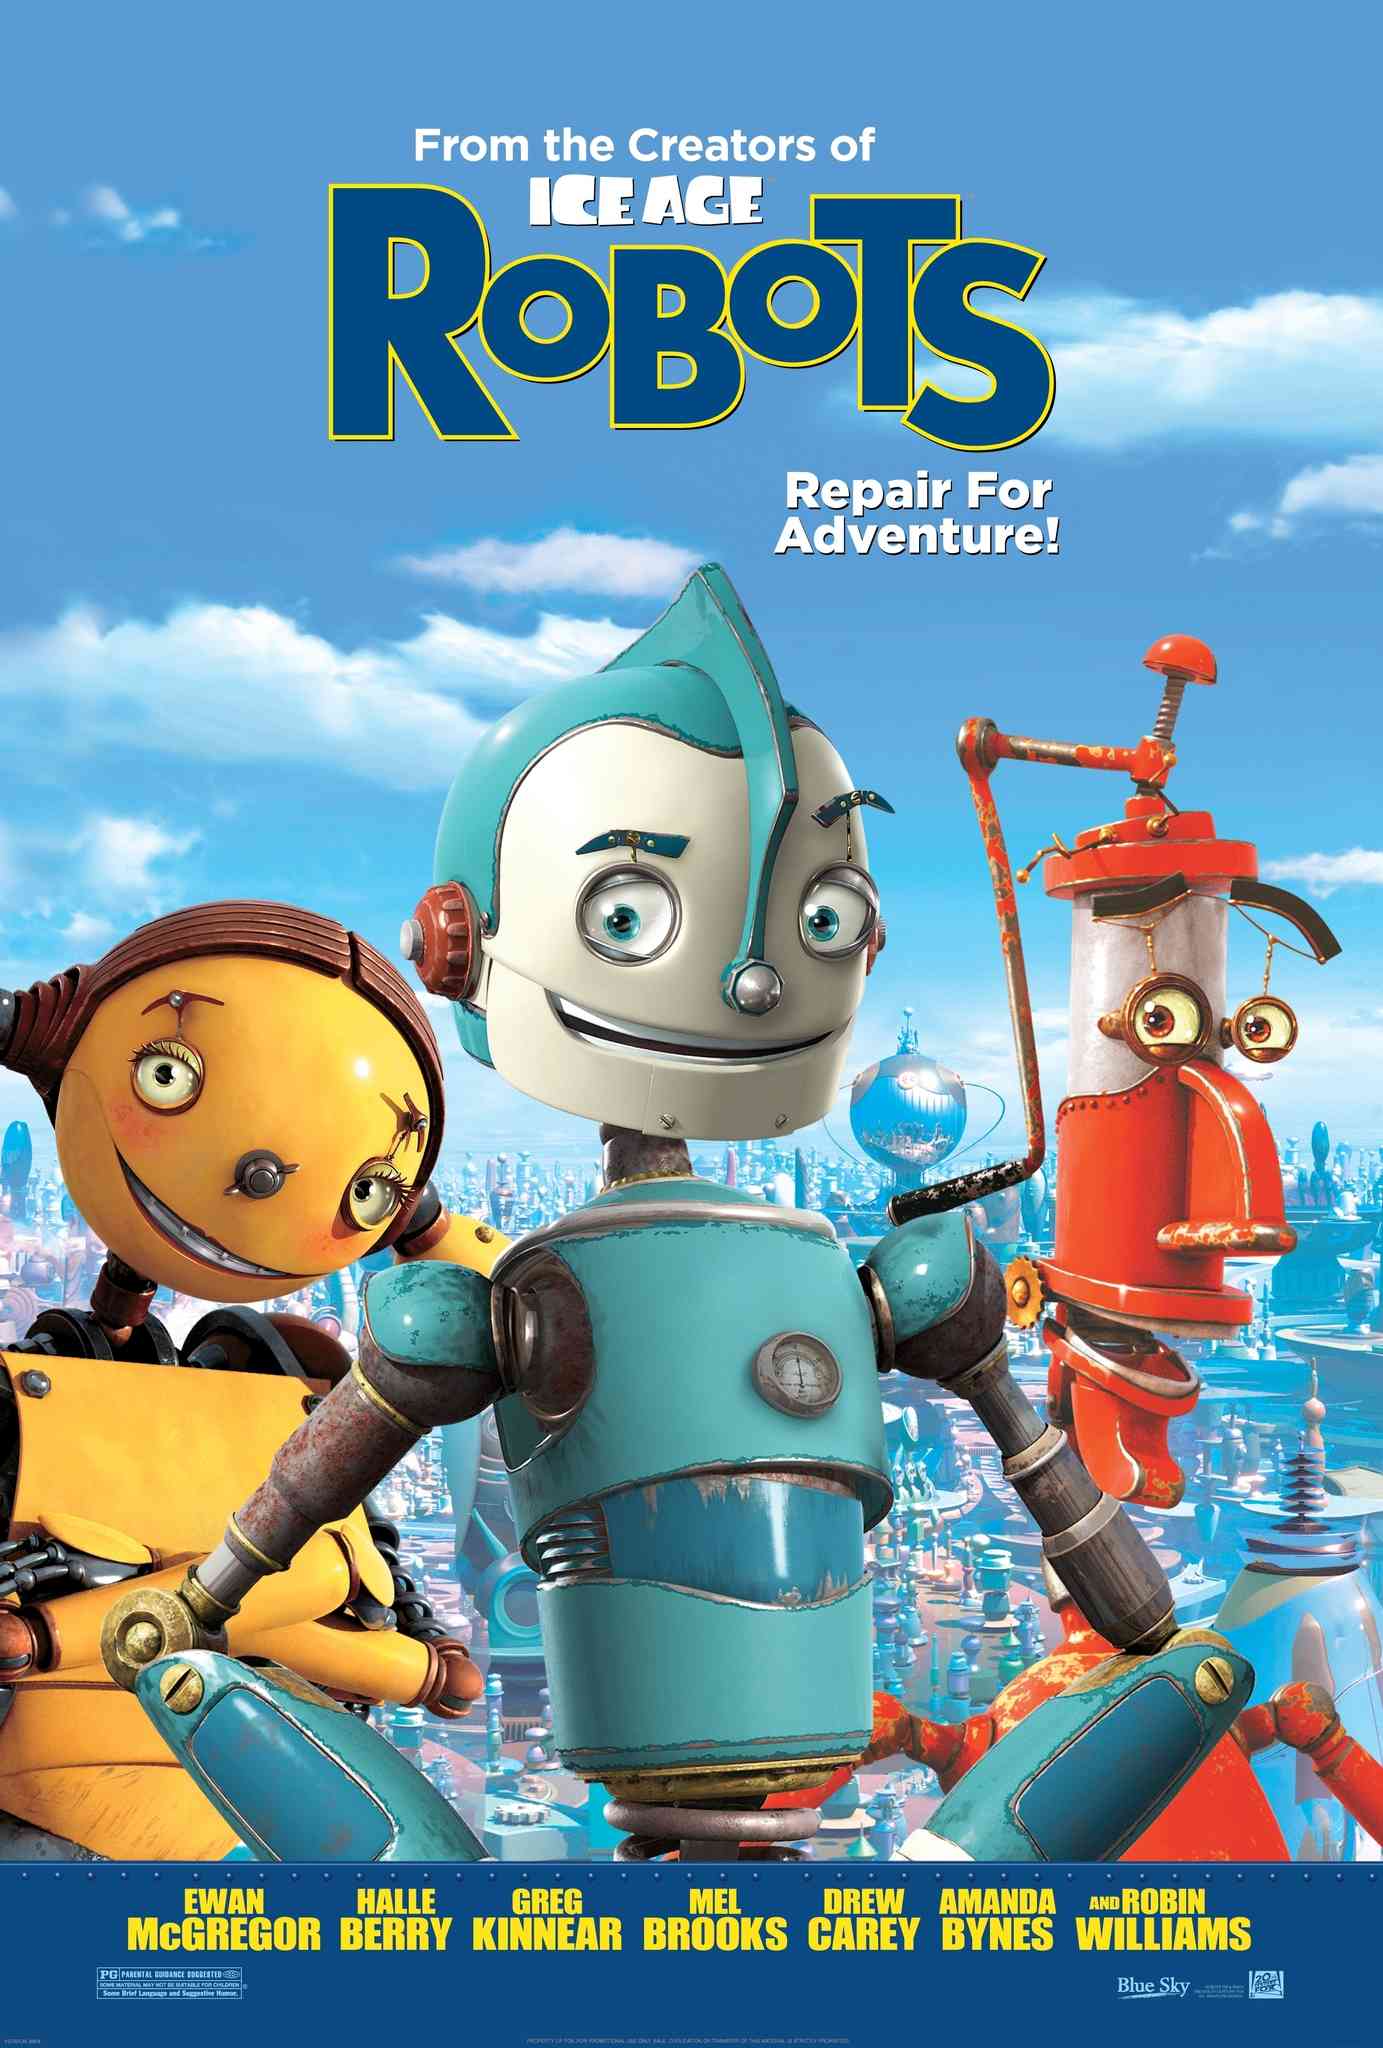 FULL MOVIE: Robots (2005) [Animation]